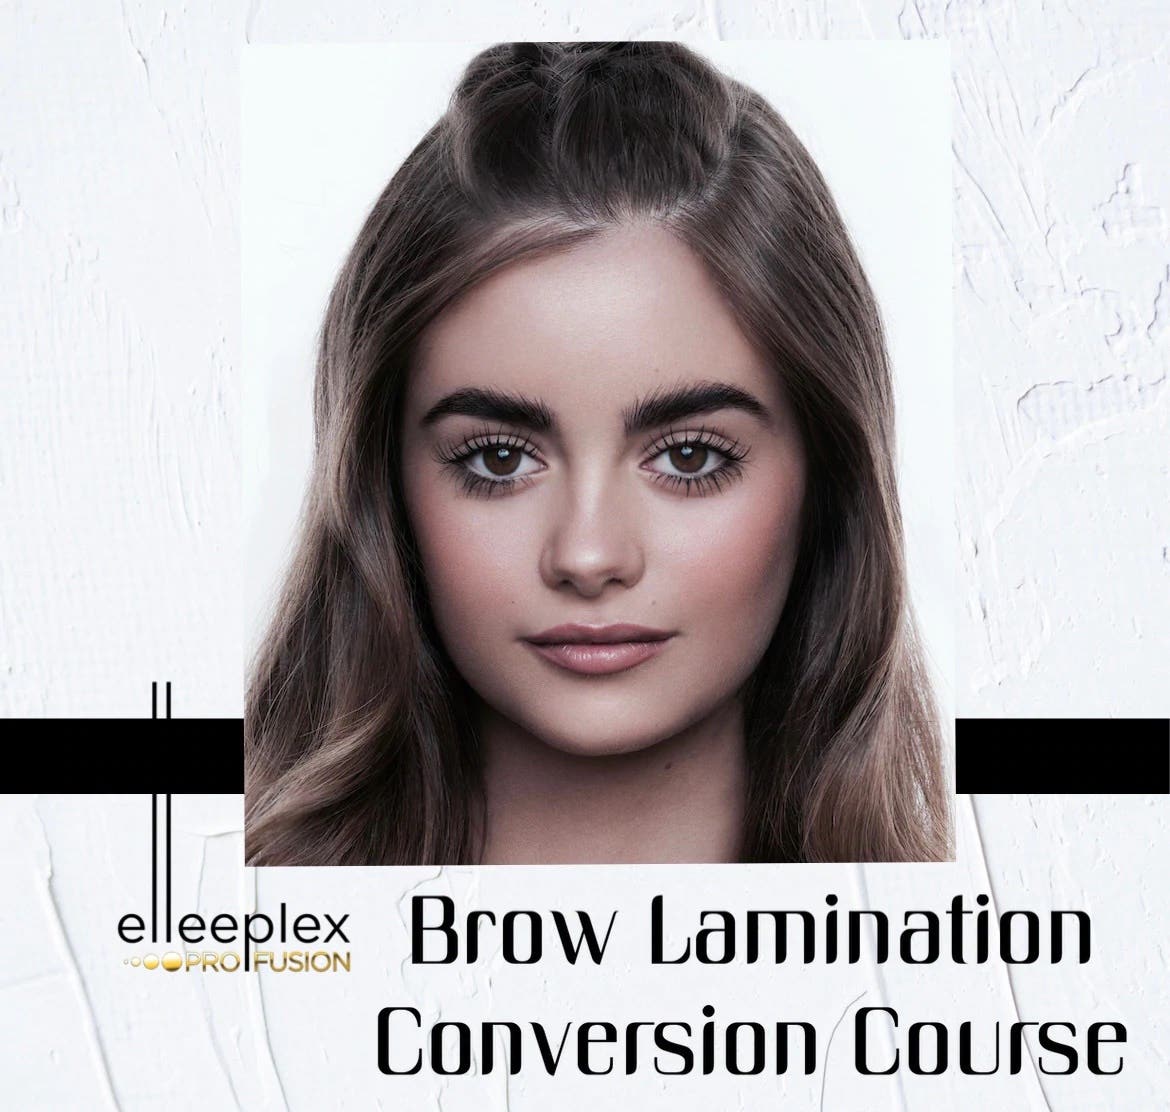 Elleebana Elleeplex Profusion CONVERSION Brow Lamination Course with Continuing Education CE CEU Hours